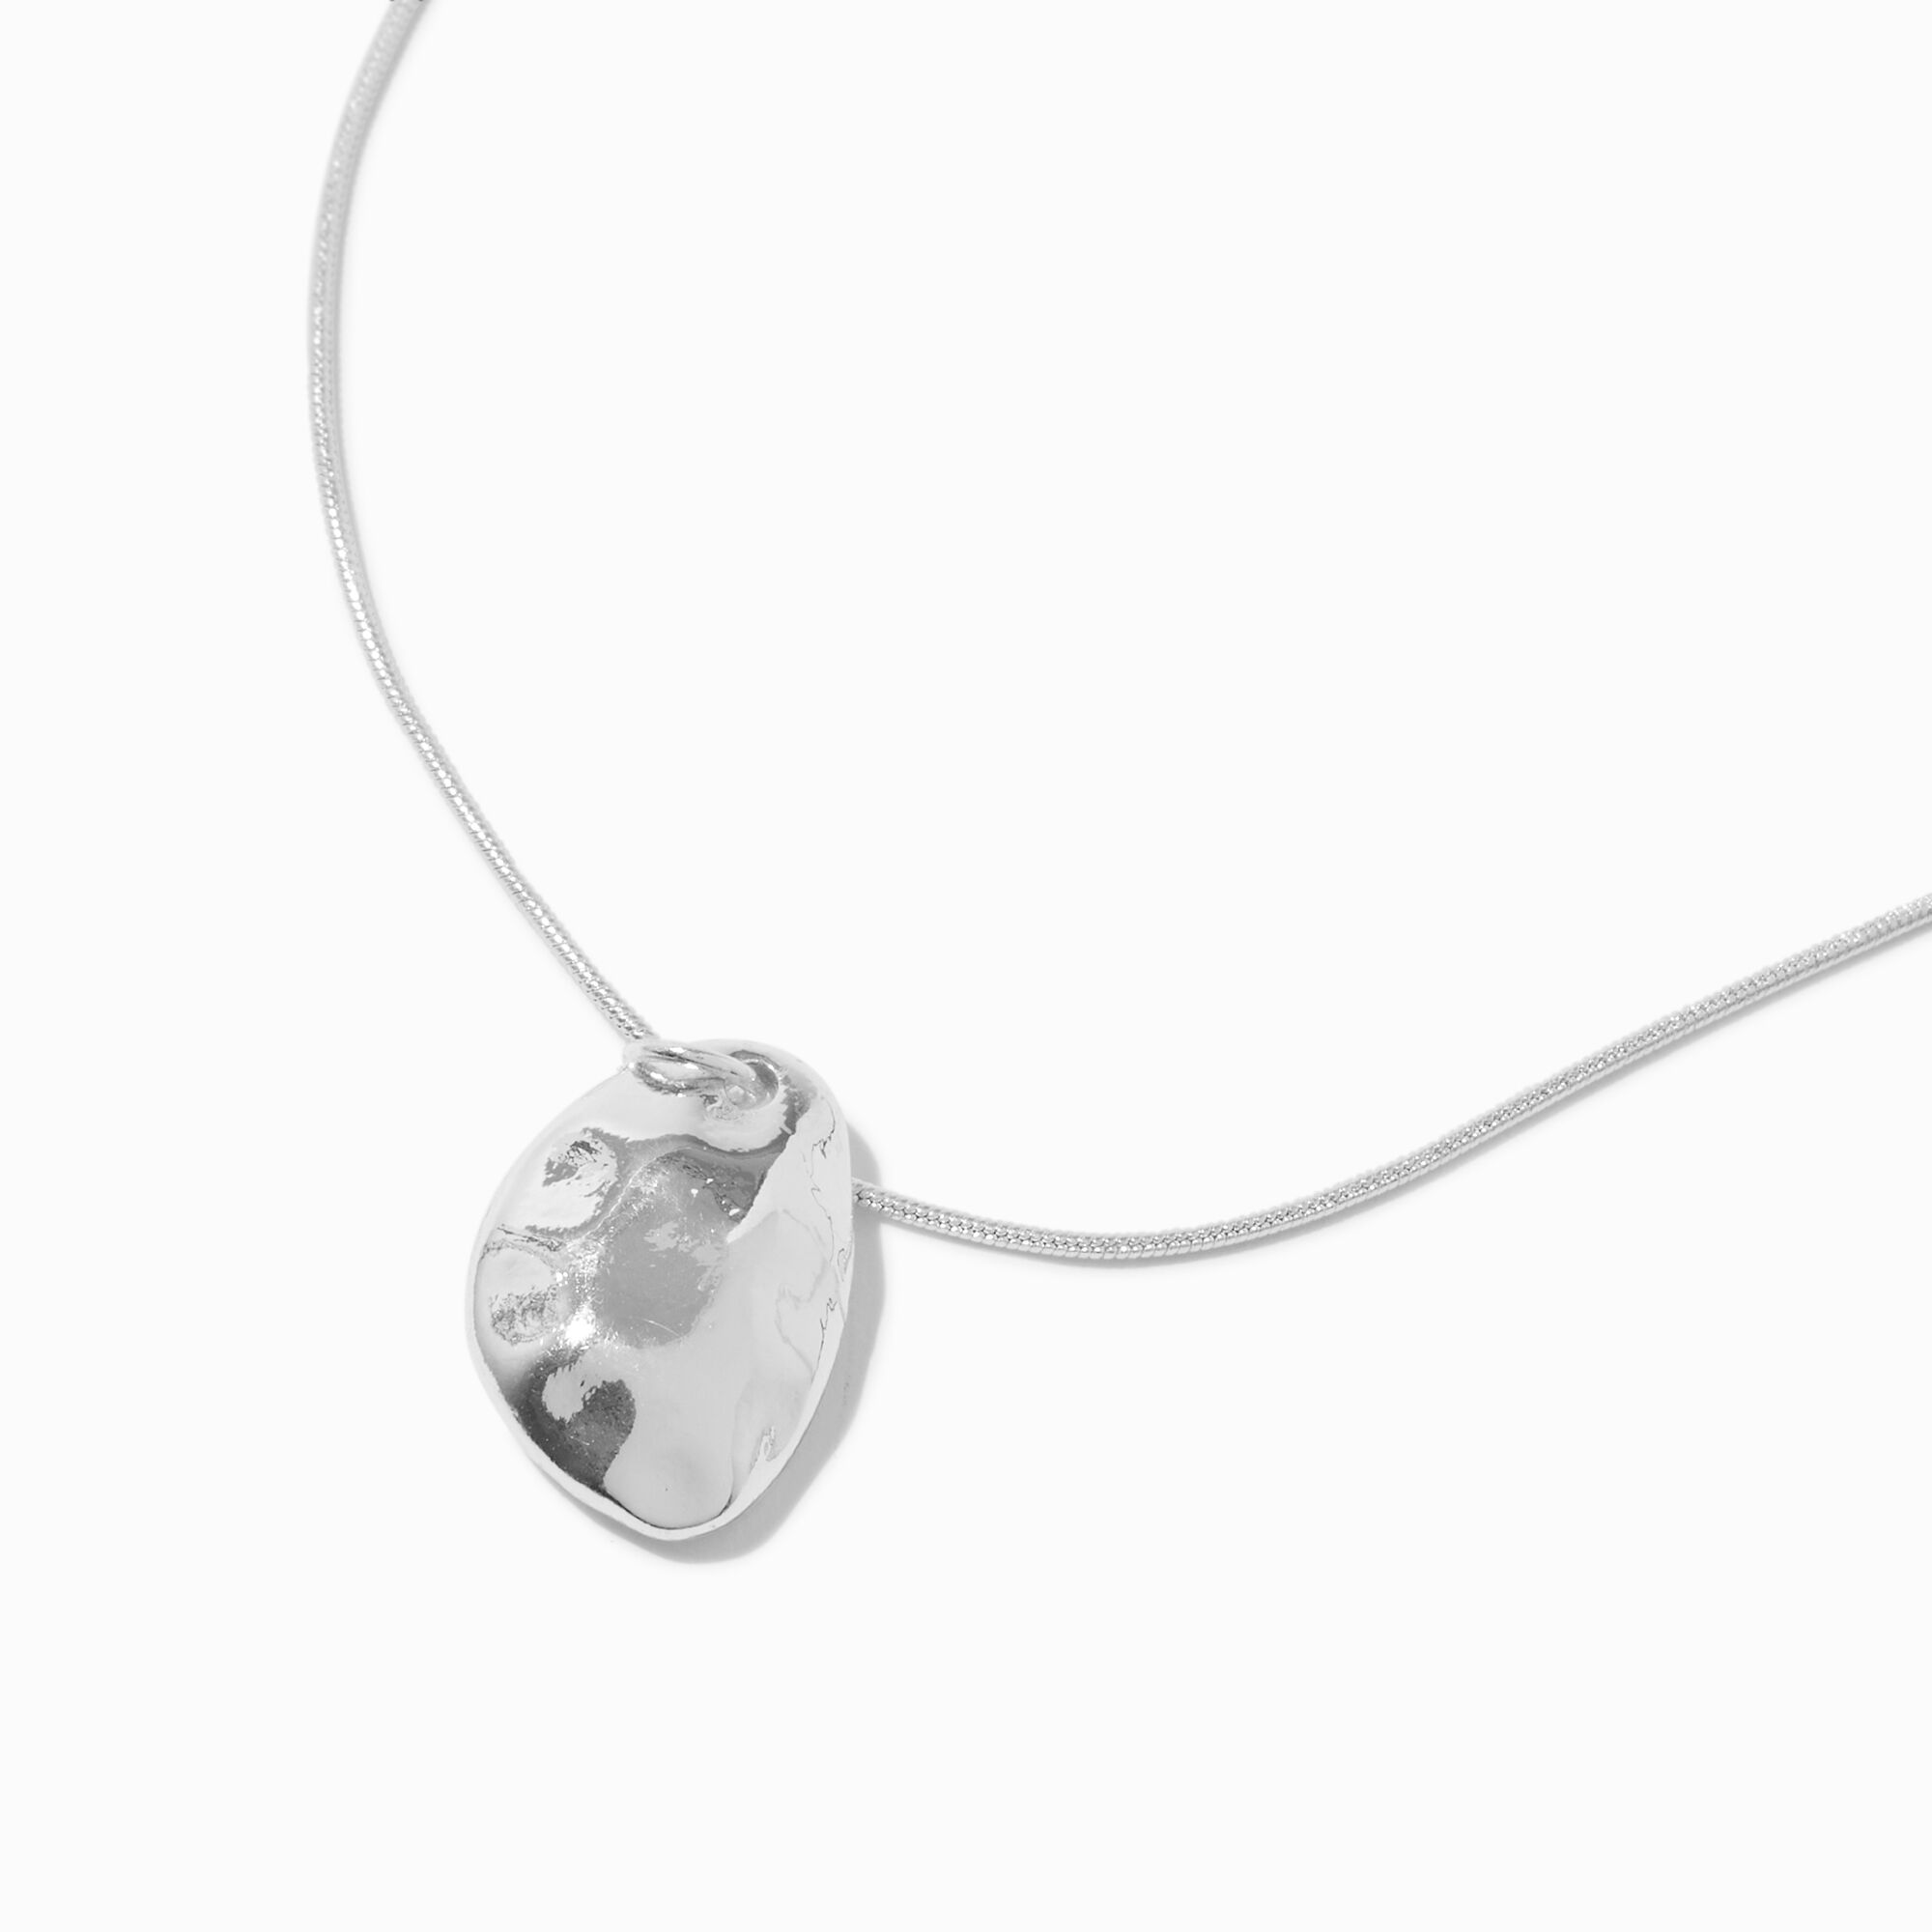 View Claires Tone Textured Pebble Pendant Necklace Silver information